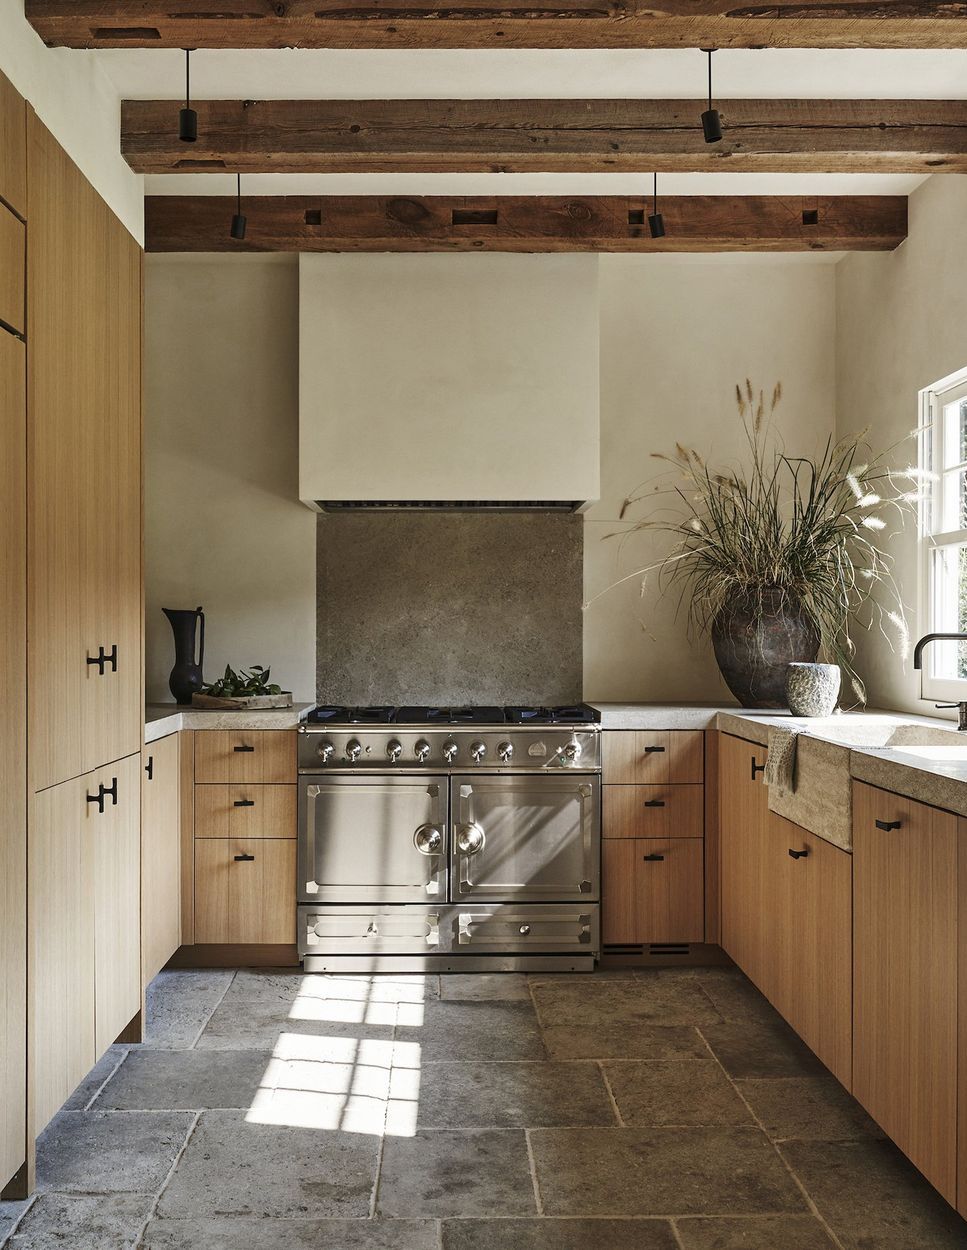 Kitchen floor ideas stone tile @carlyledesigns